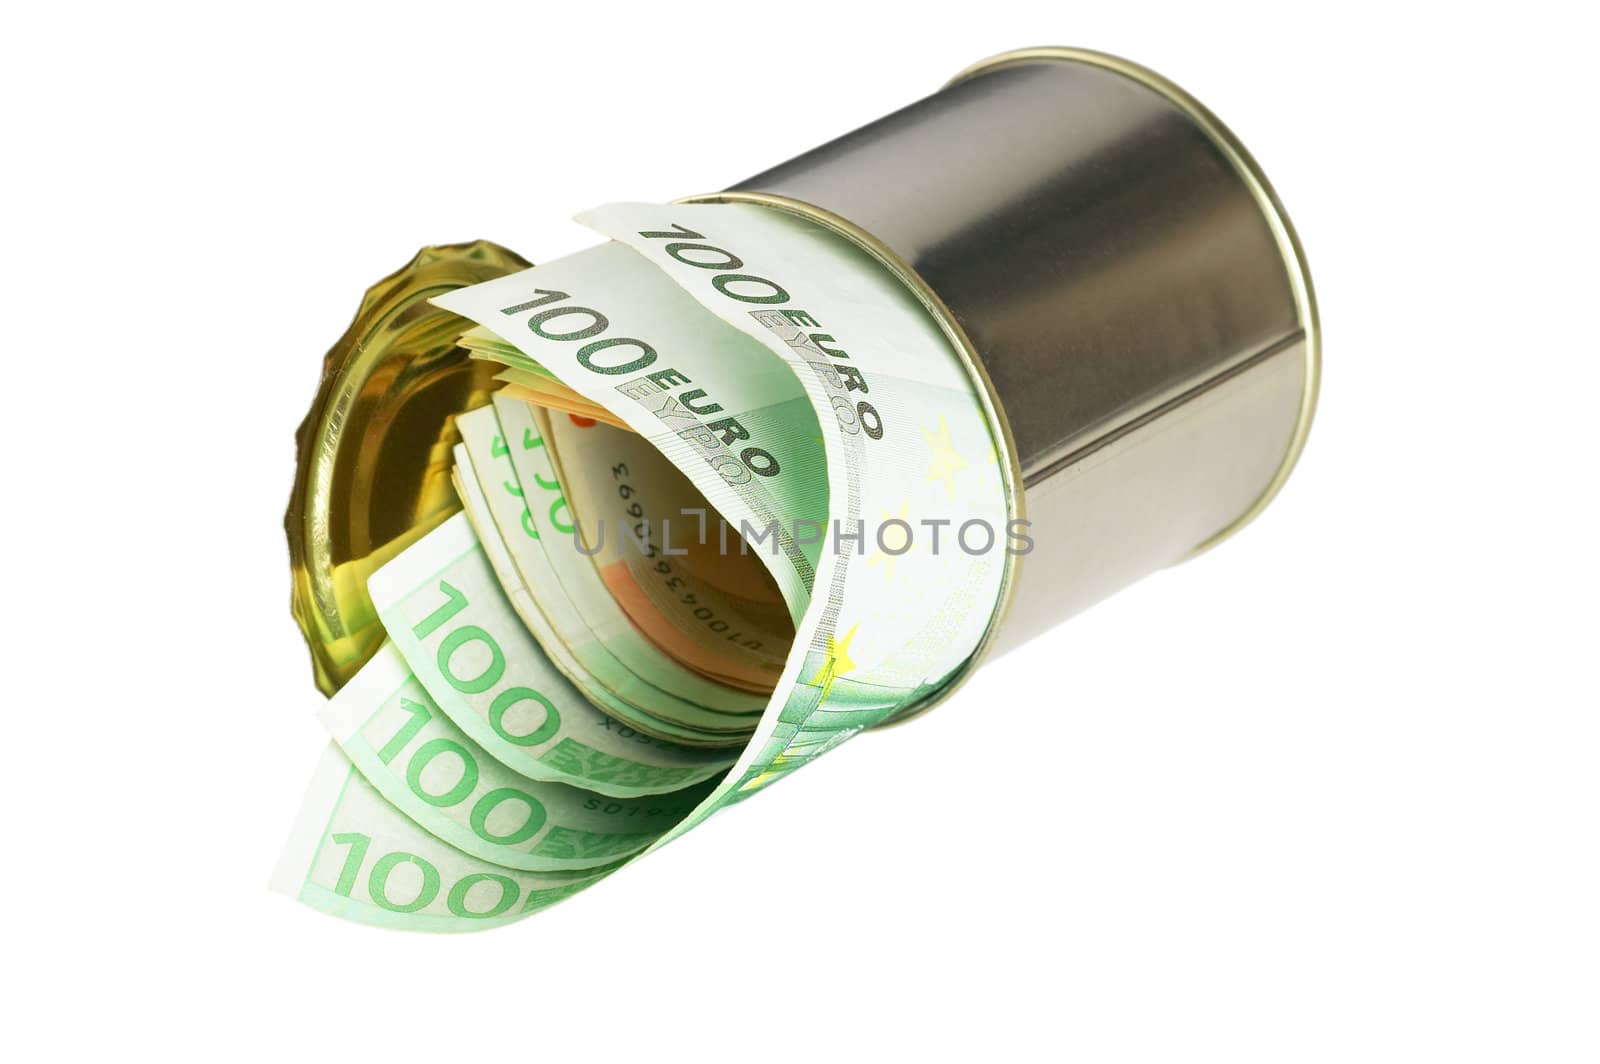 euro bills on a tin can by keko64